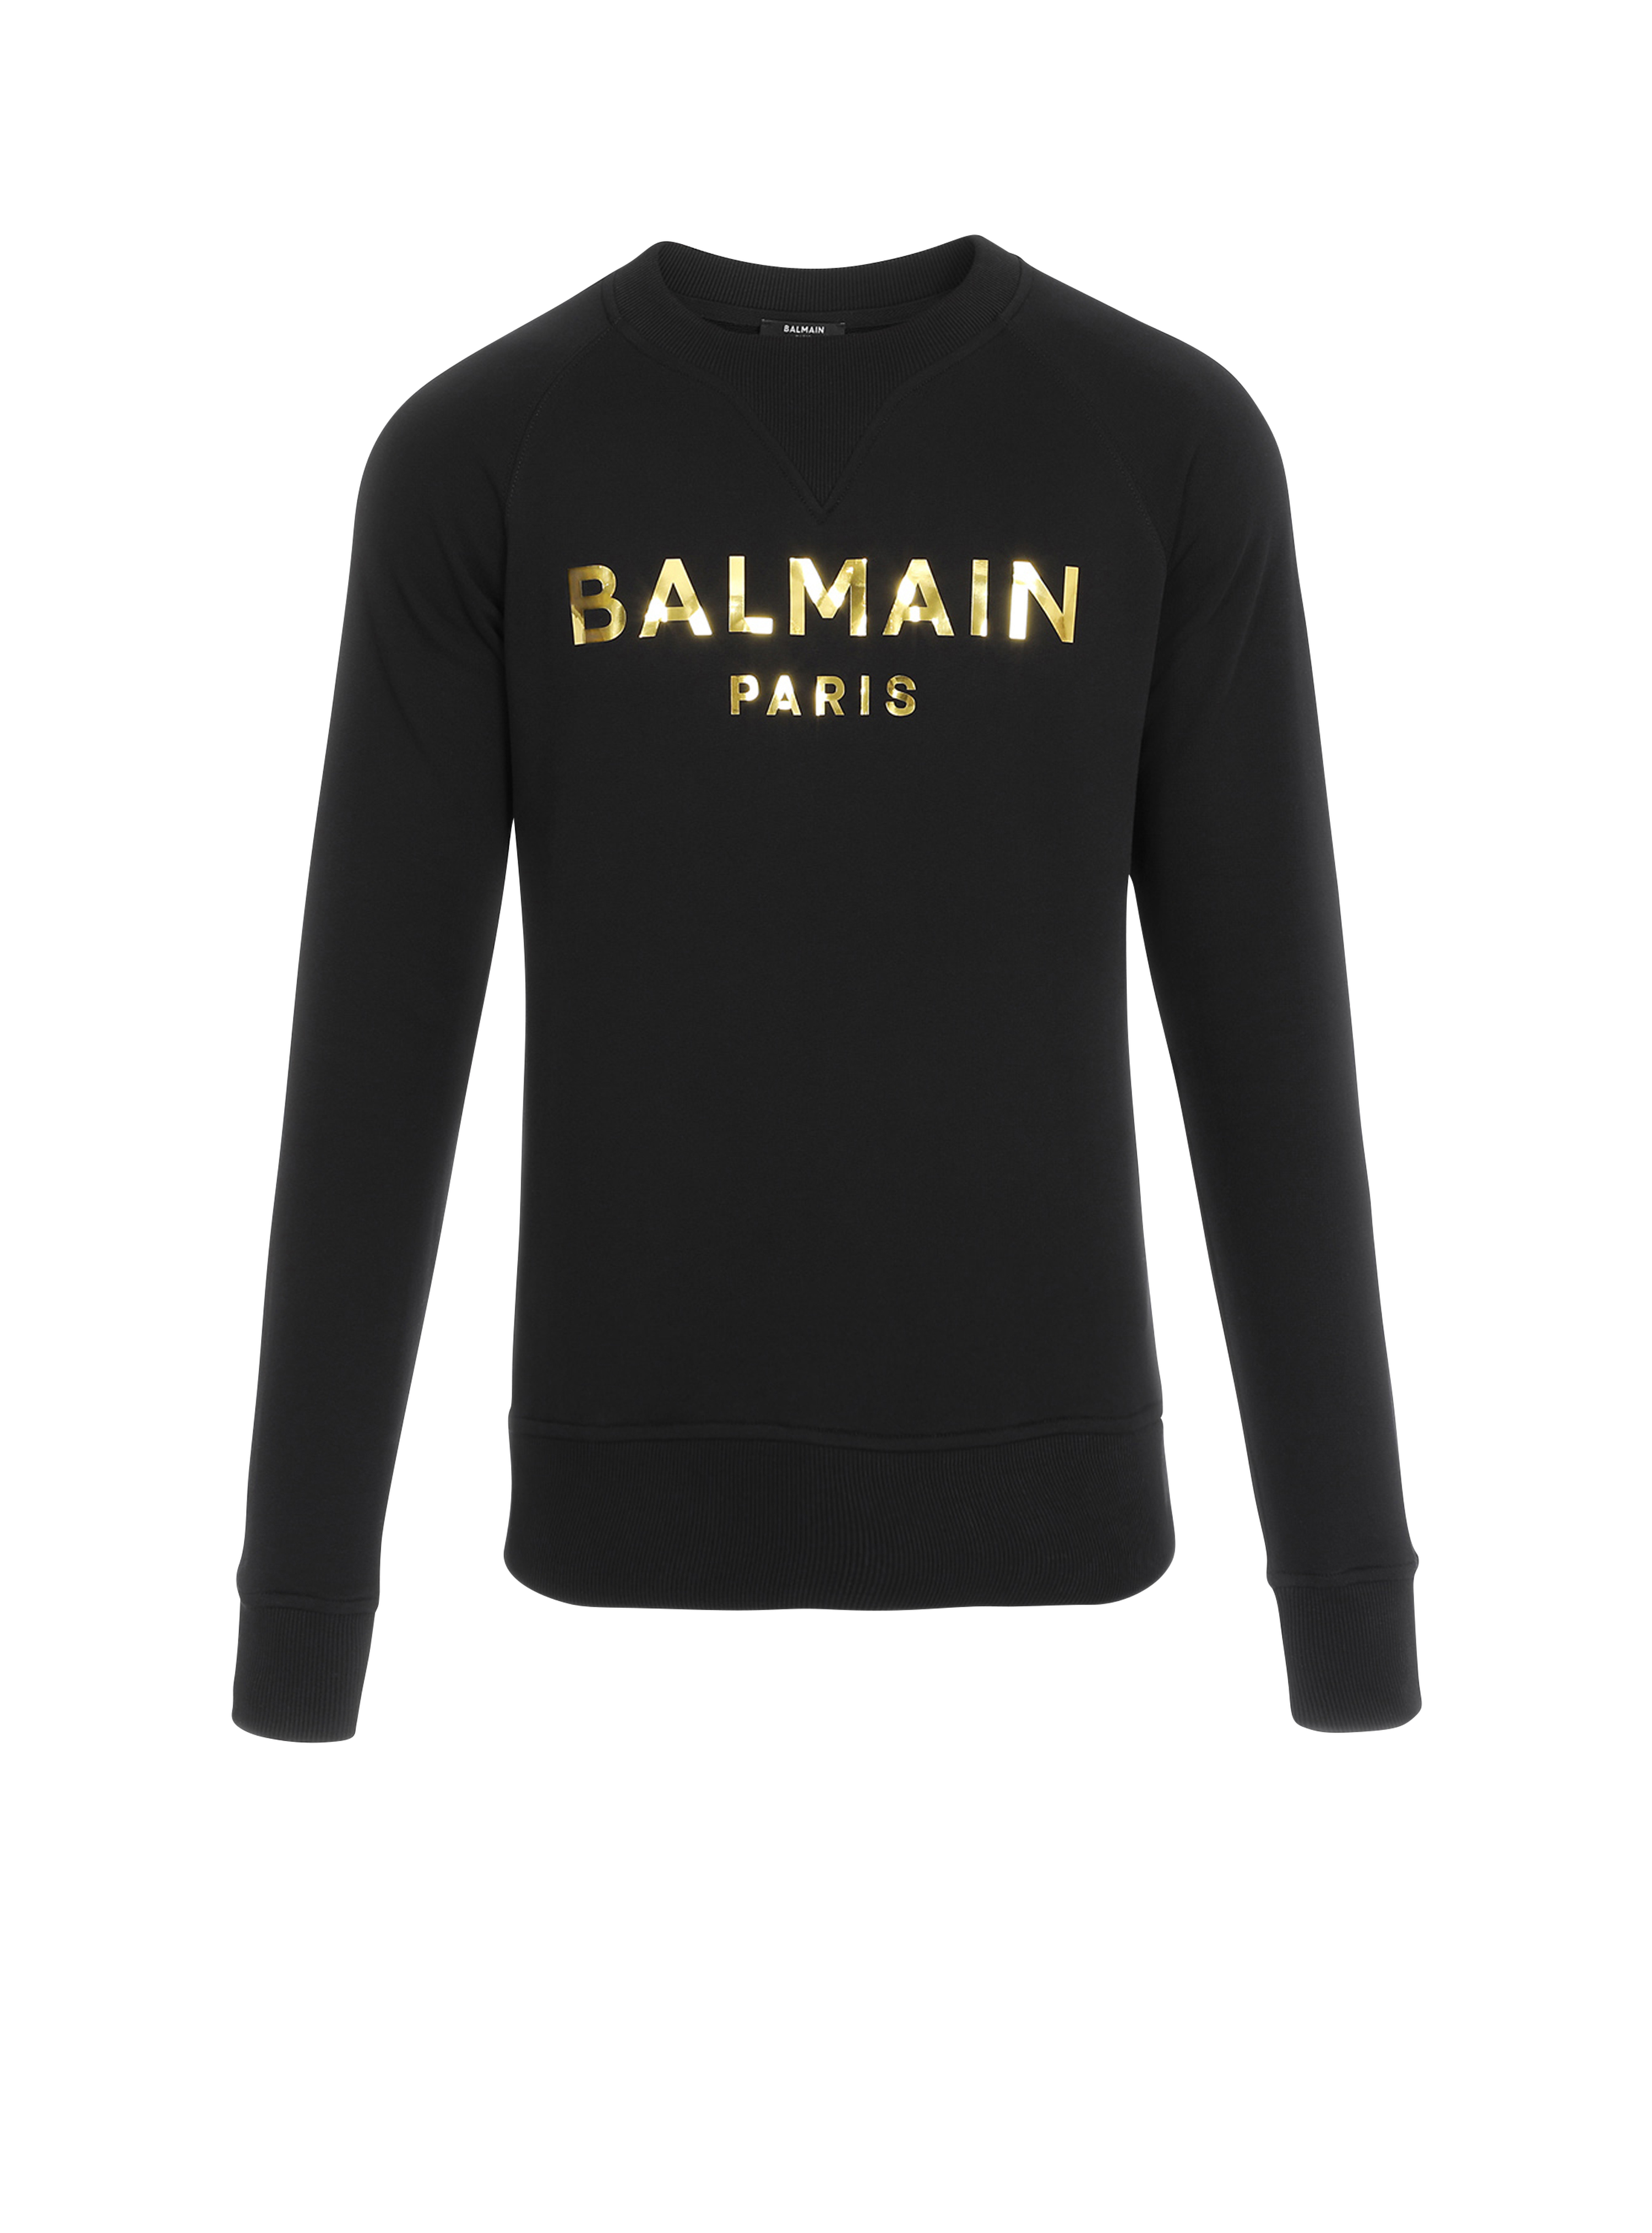 Eco-designed cotton sweatshirt with Balmain Paris metallic logo print, gold